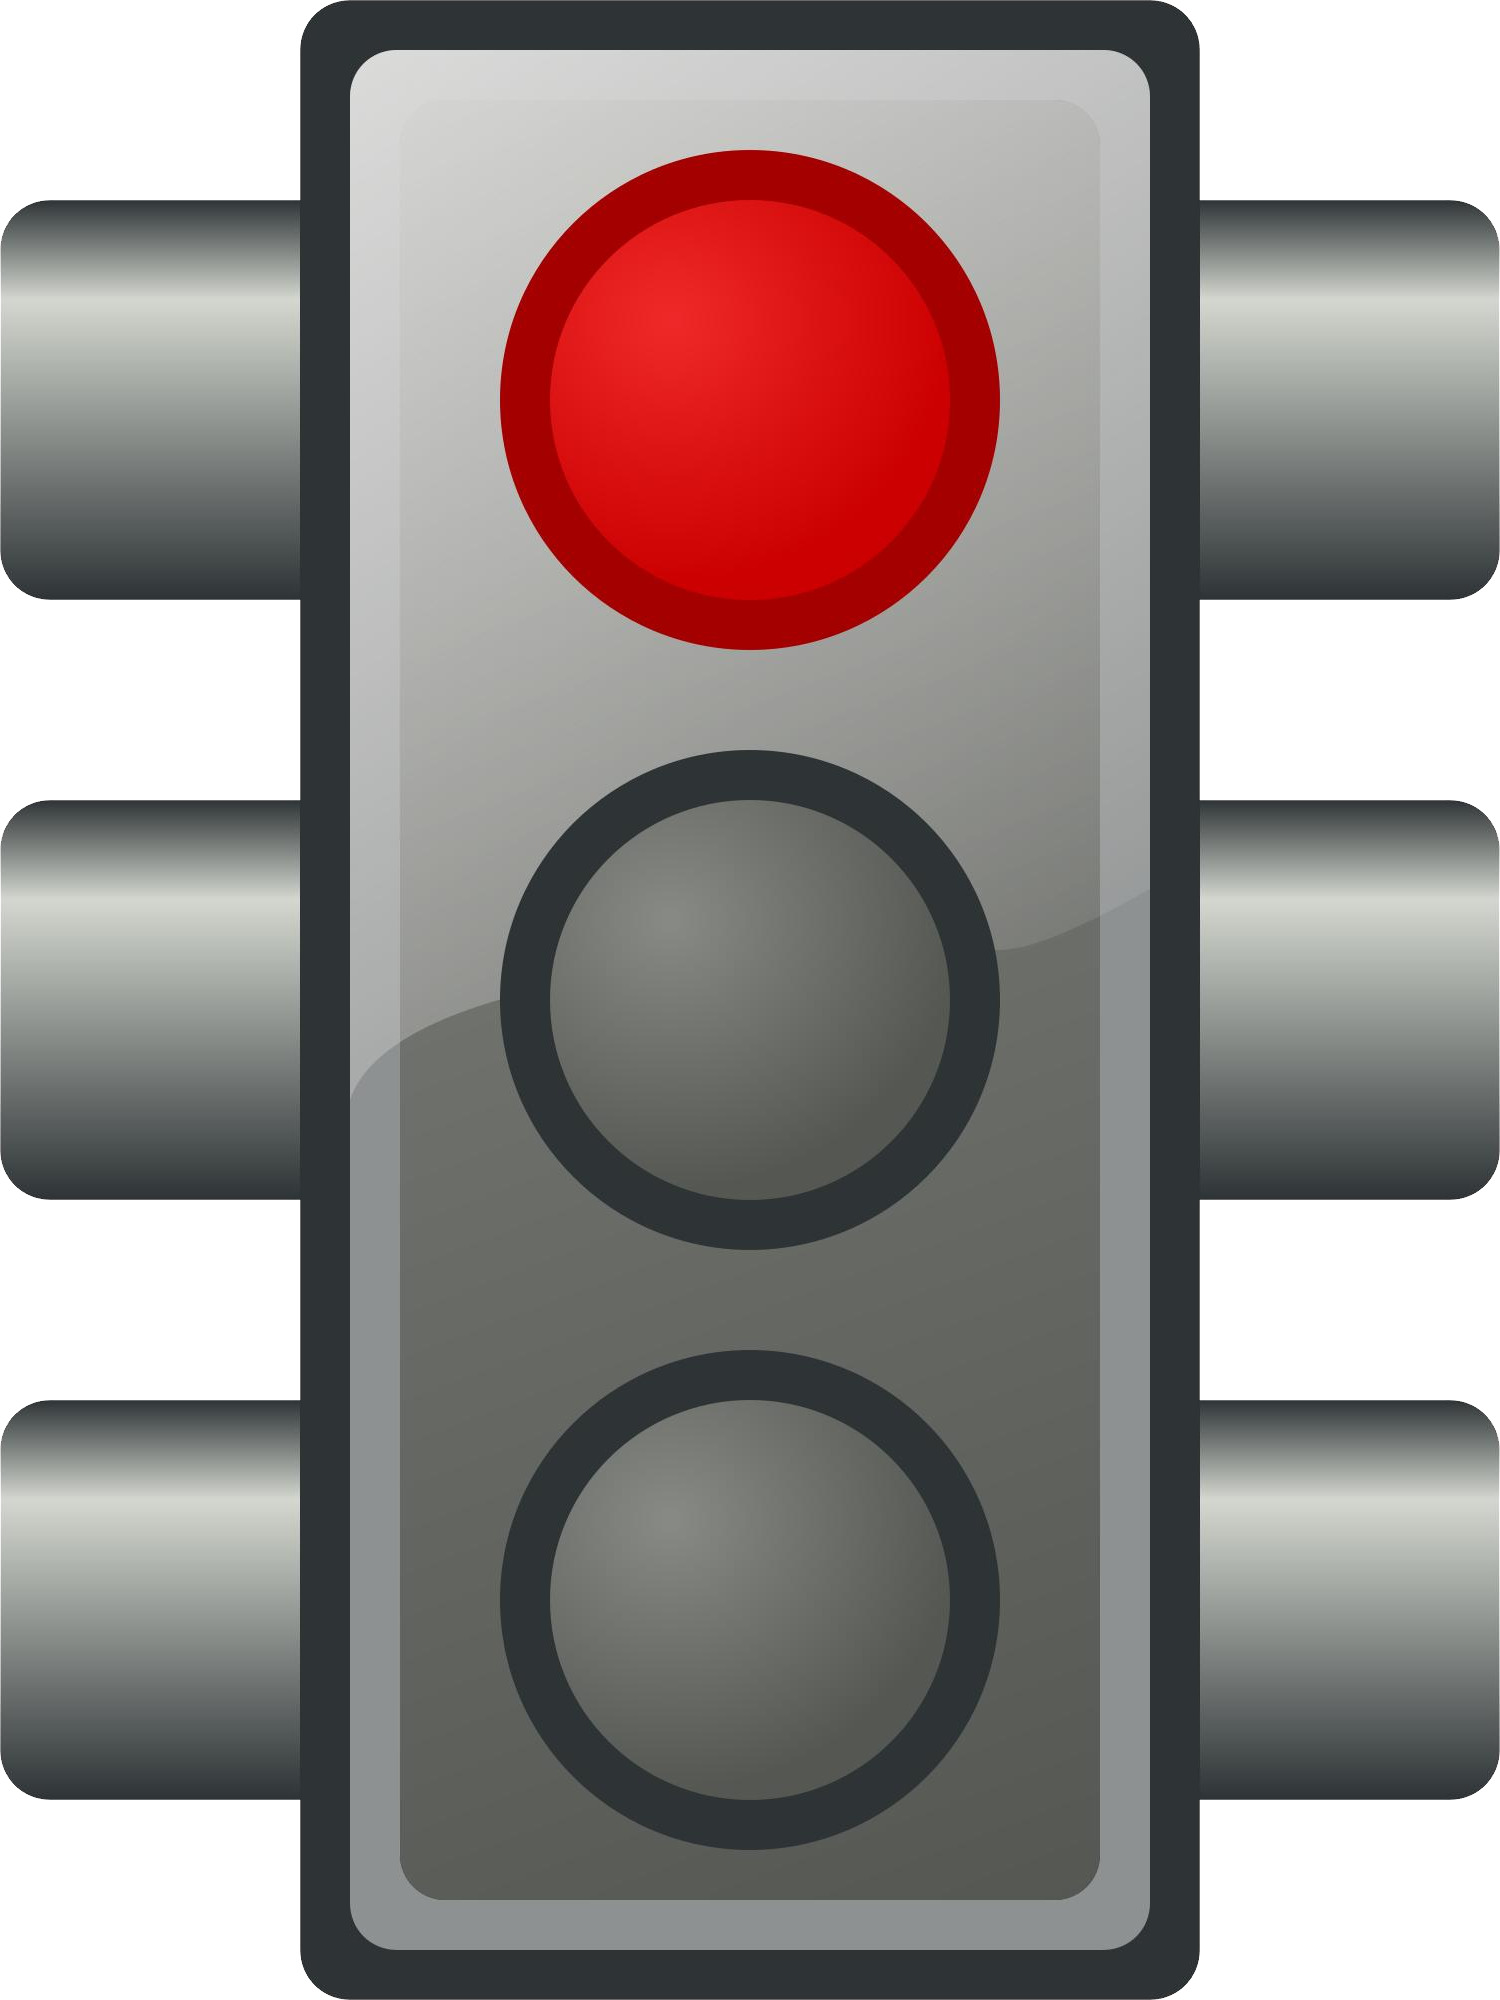 red traffic light clipart